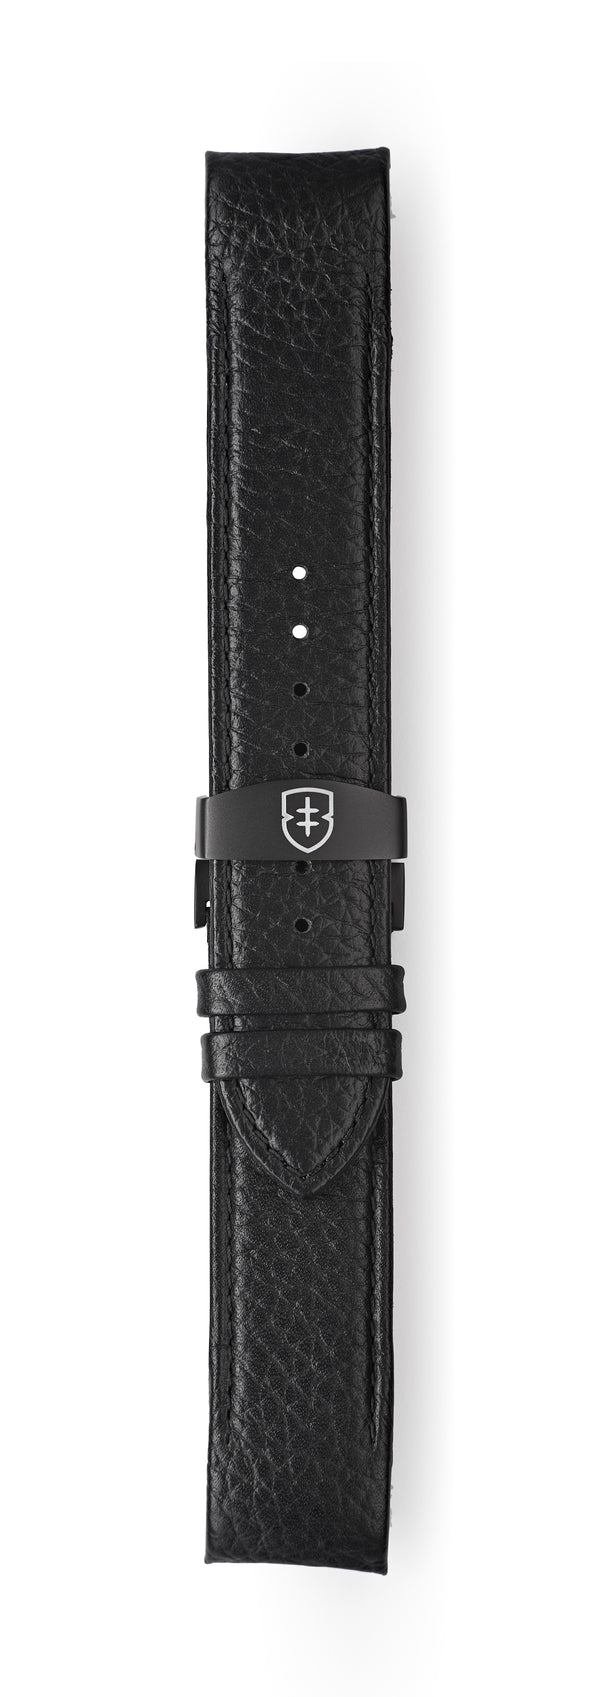 STR-L01: Black Pebbled Leather Deployant for Bloxworth